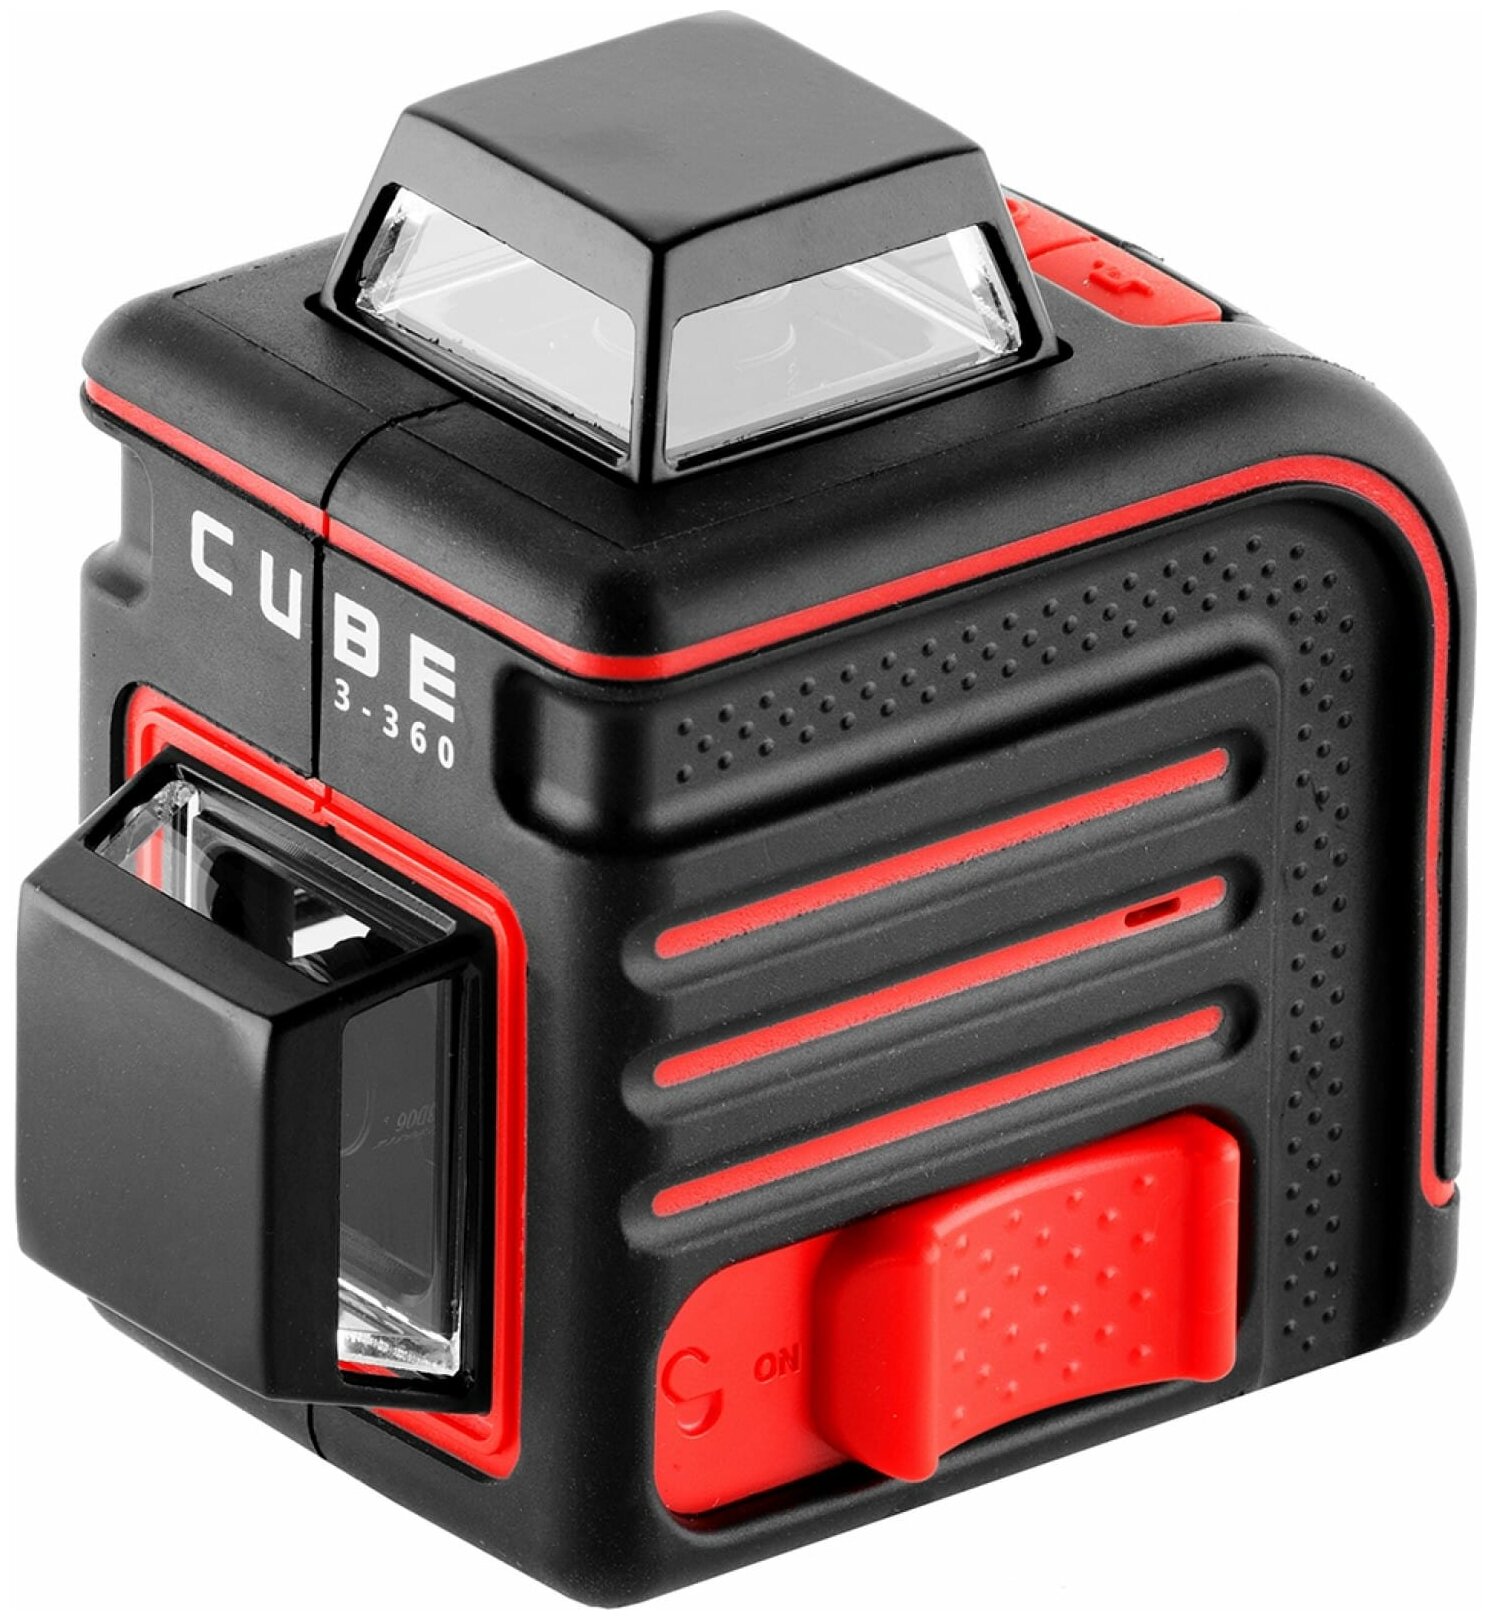 Cube mini basic edition. Лазерный уровень ada Cube 3-360 Basic Edition. Лазерный уровень ada Cube 3-360 professional Edition а00572. Ada Cube 3-360 Basic Edition а00559. Лазерный уровень ada Cube 3-360 Home Edition а00565.